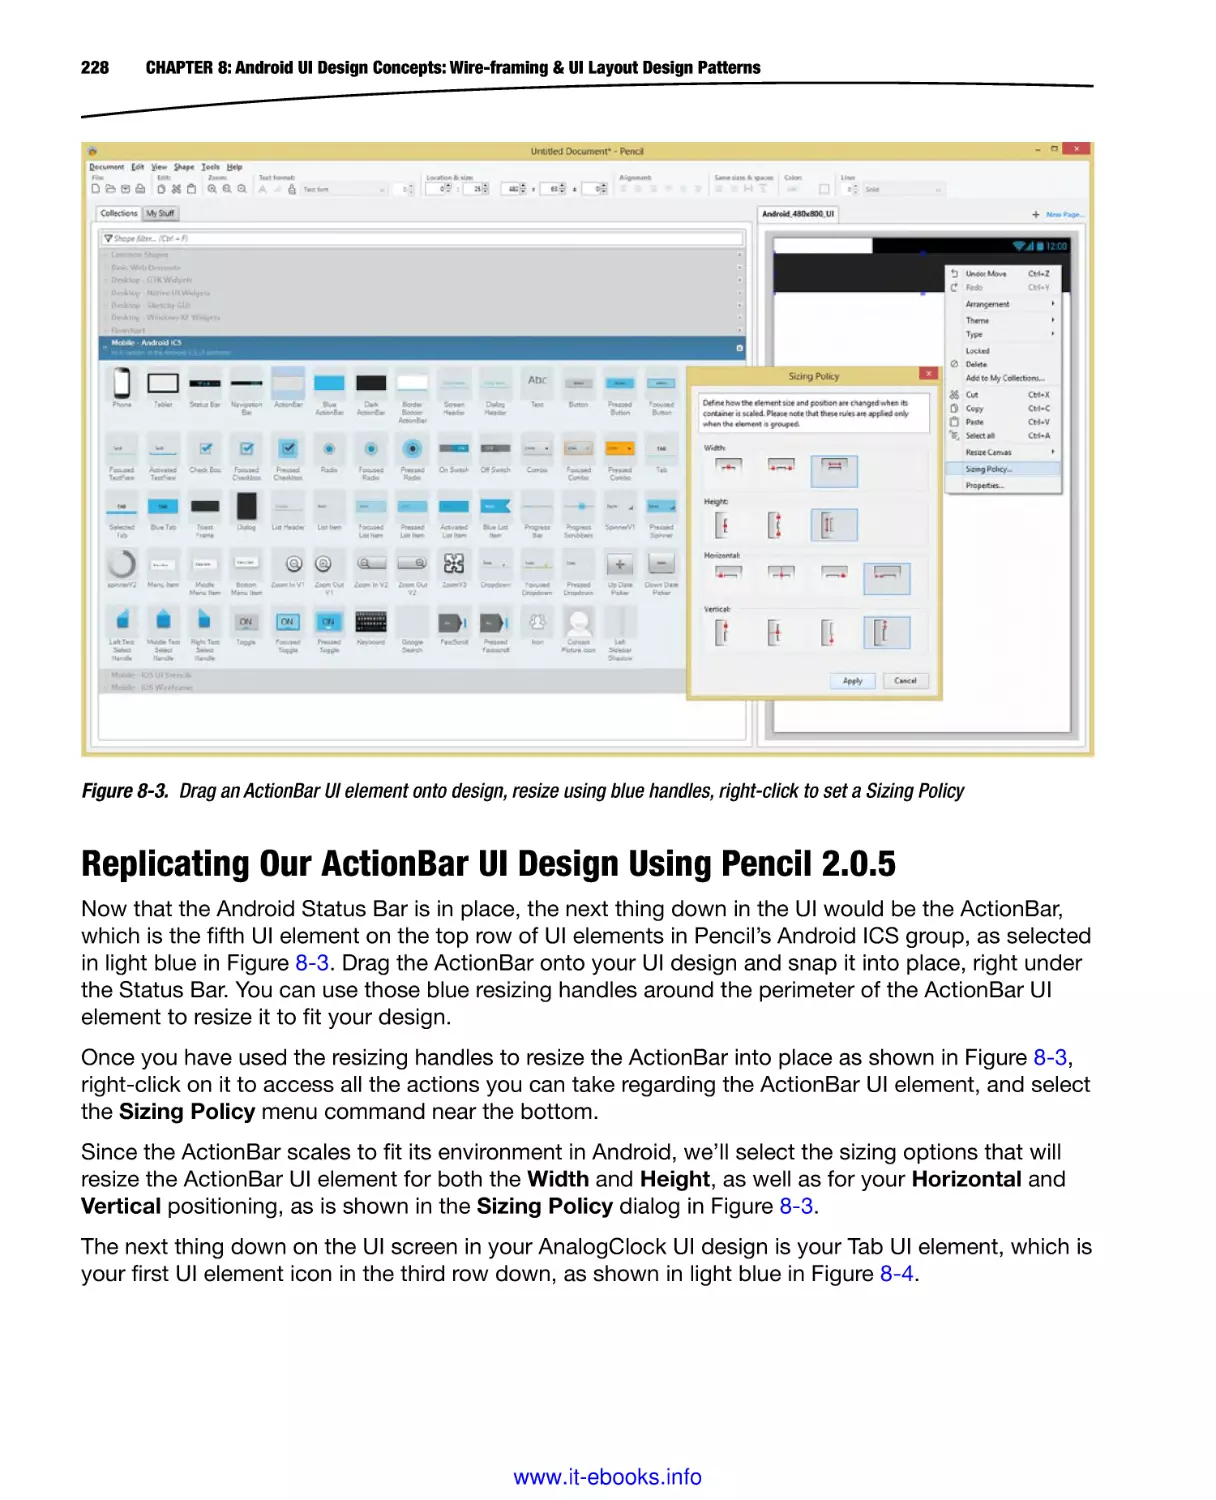 Replicating Our ActionBar UI Design Using Pencil 2.0.5